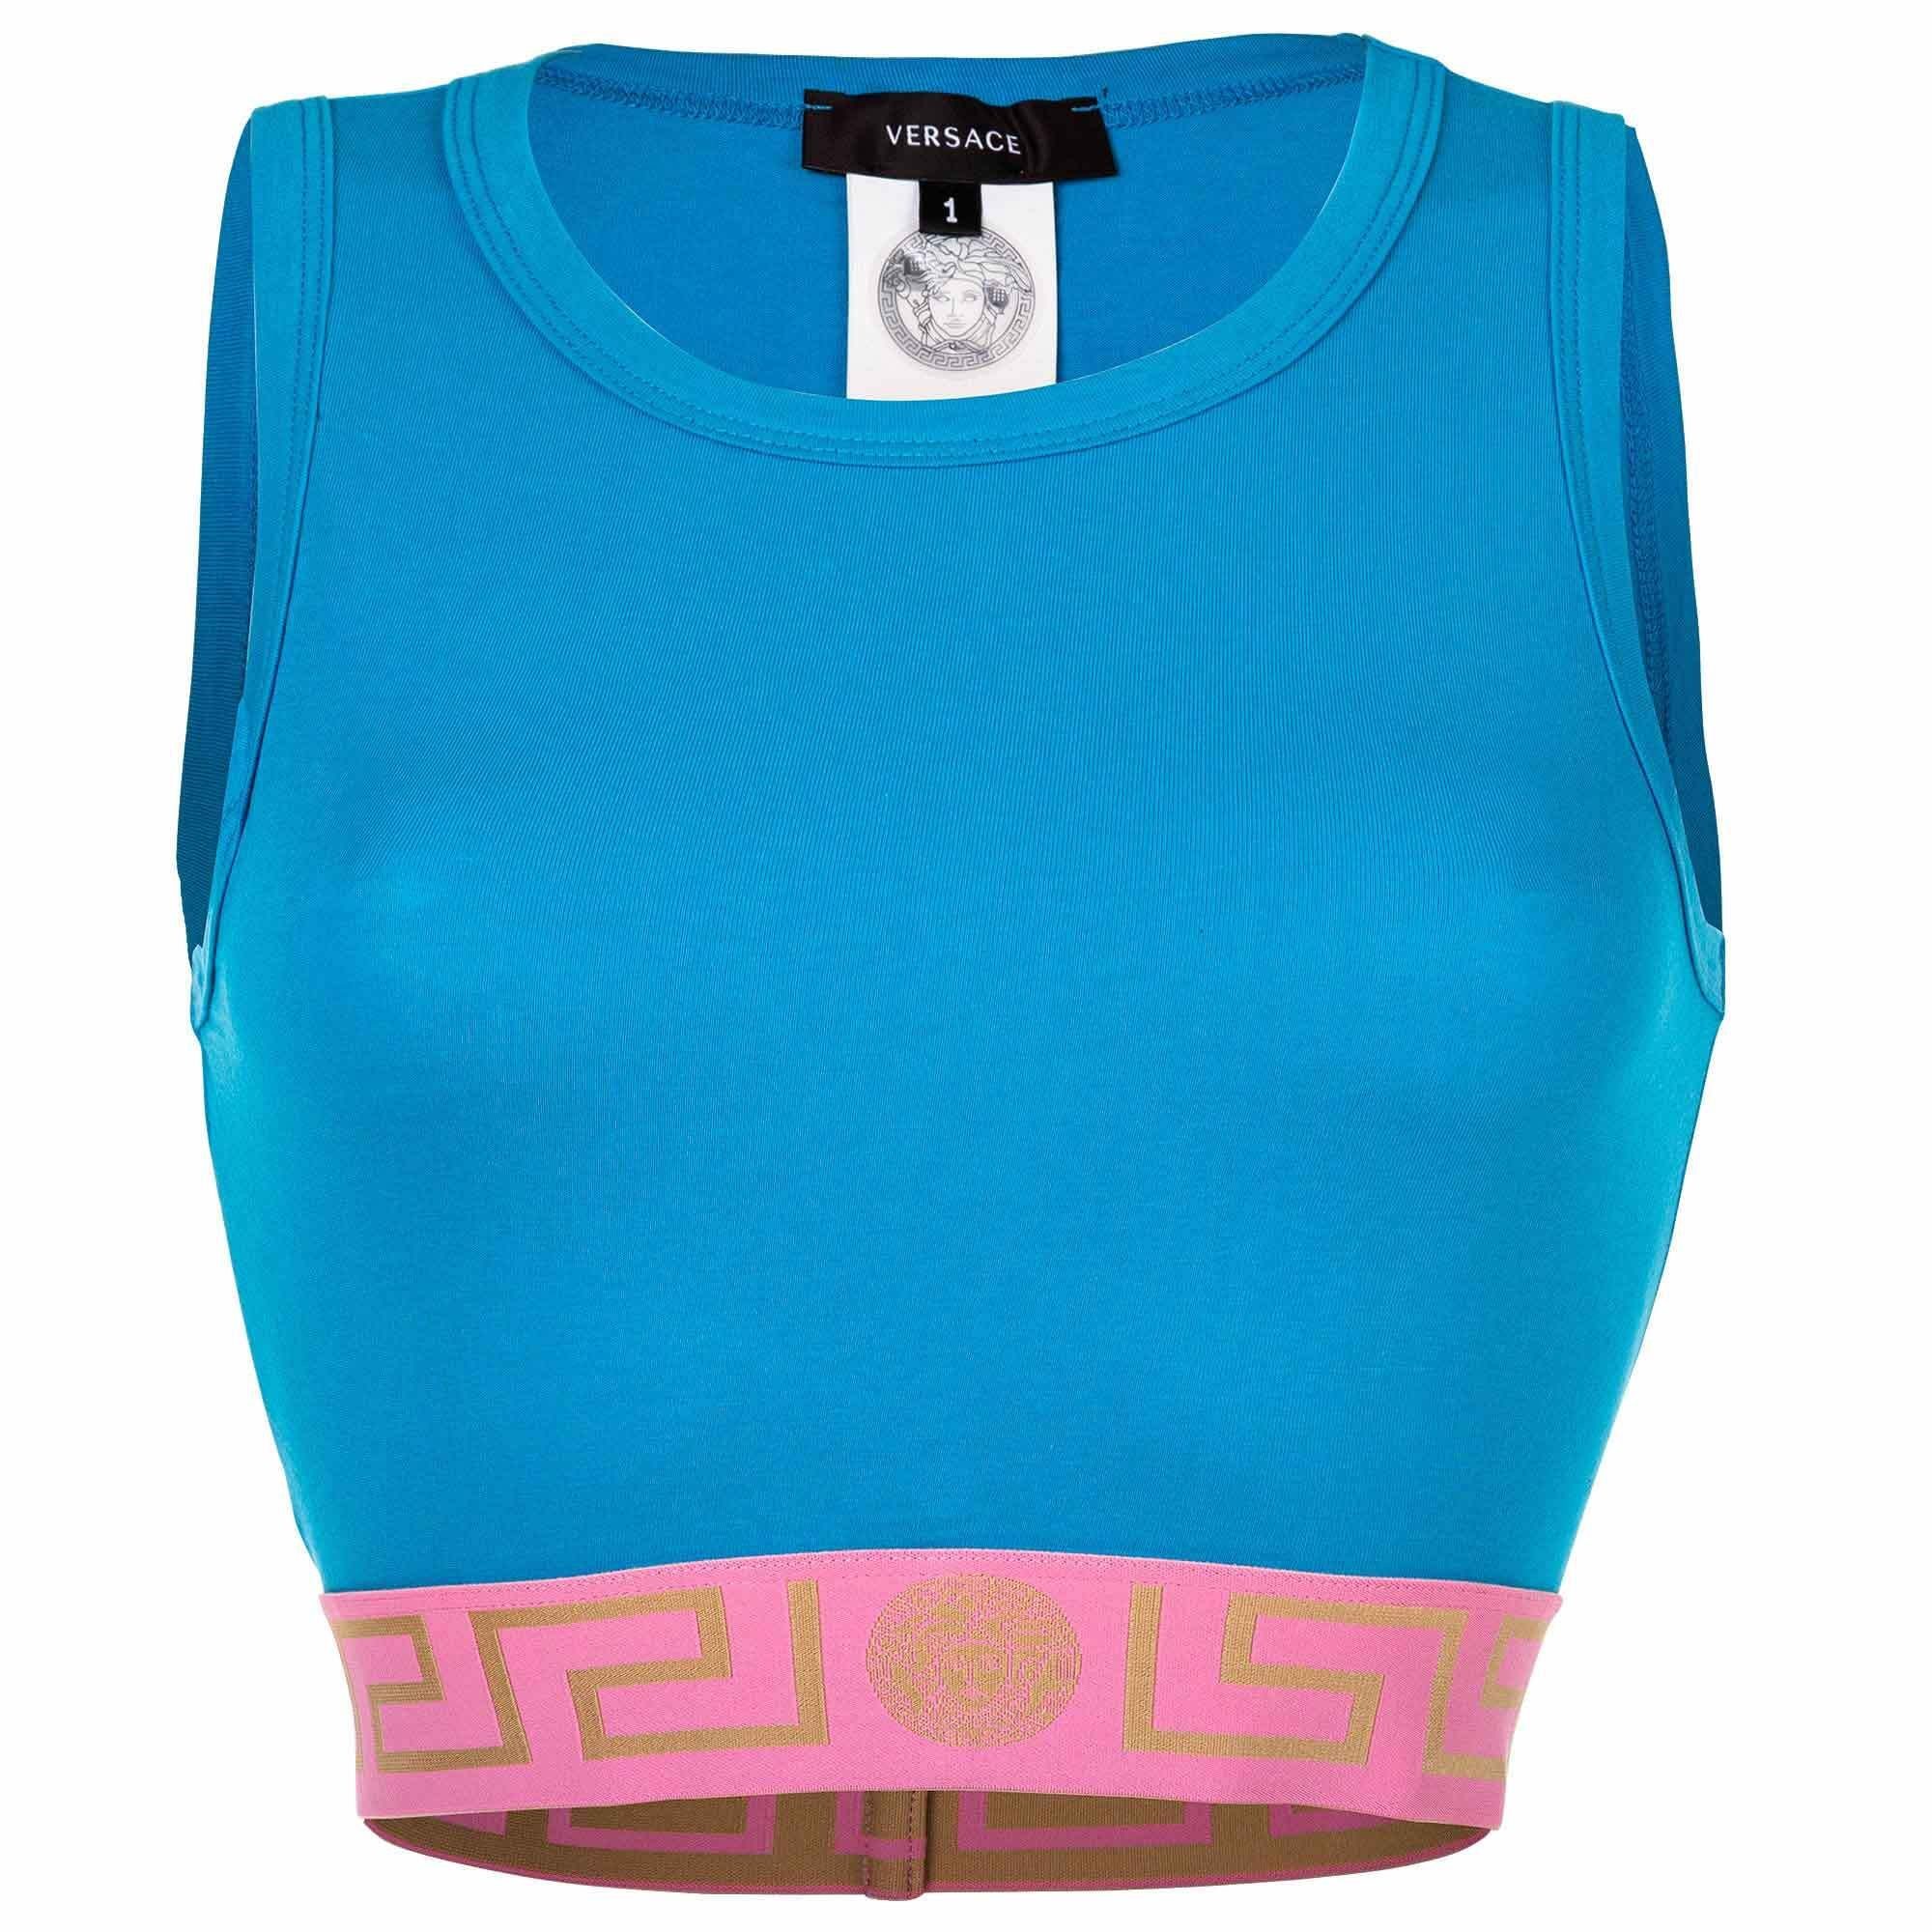 Versace Bustier Damen Bustier - TOPEKA, Underwear T-Shirt, Tank Blau/Rosa